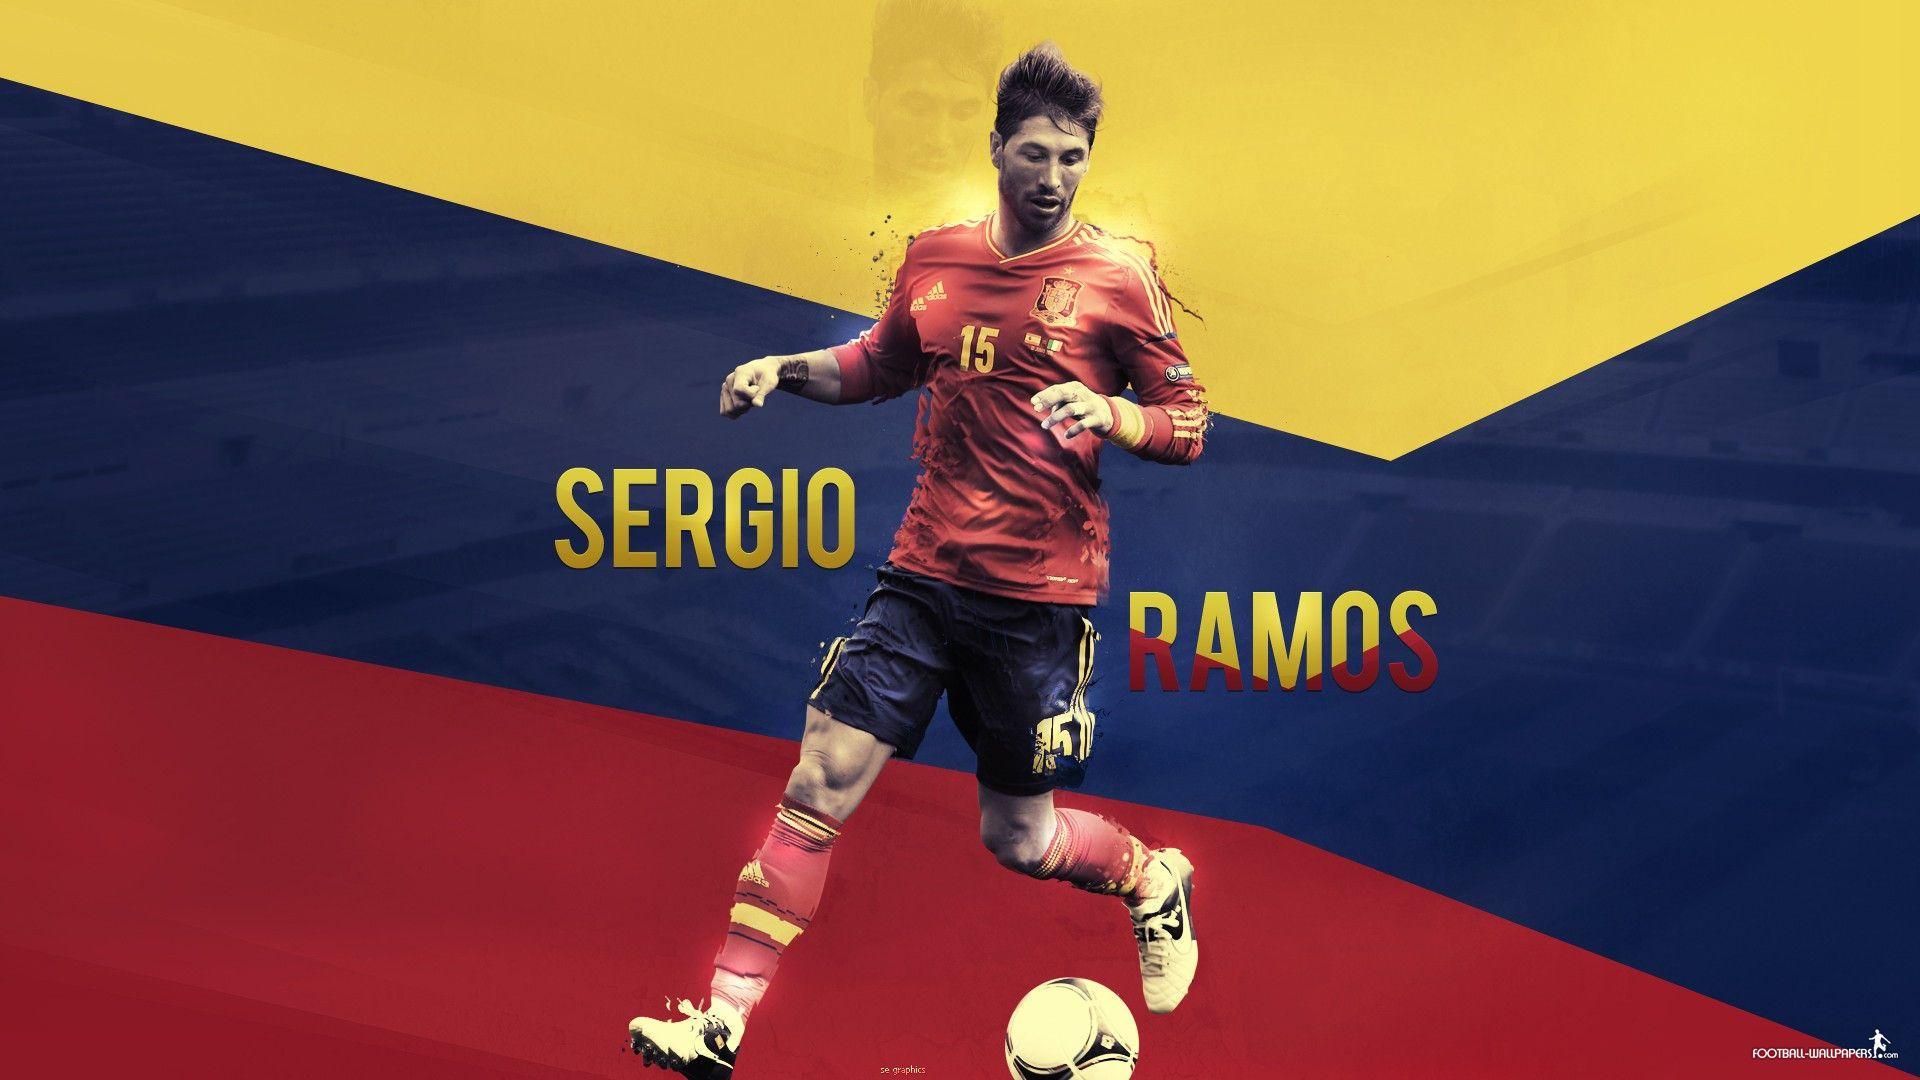 Sergio Ramos Spain Wallpaper HD Wallpaper: Players, Teams, Leagues